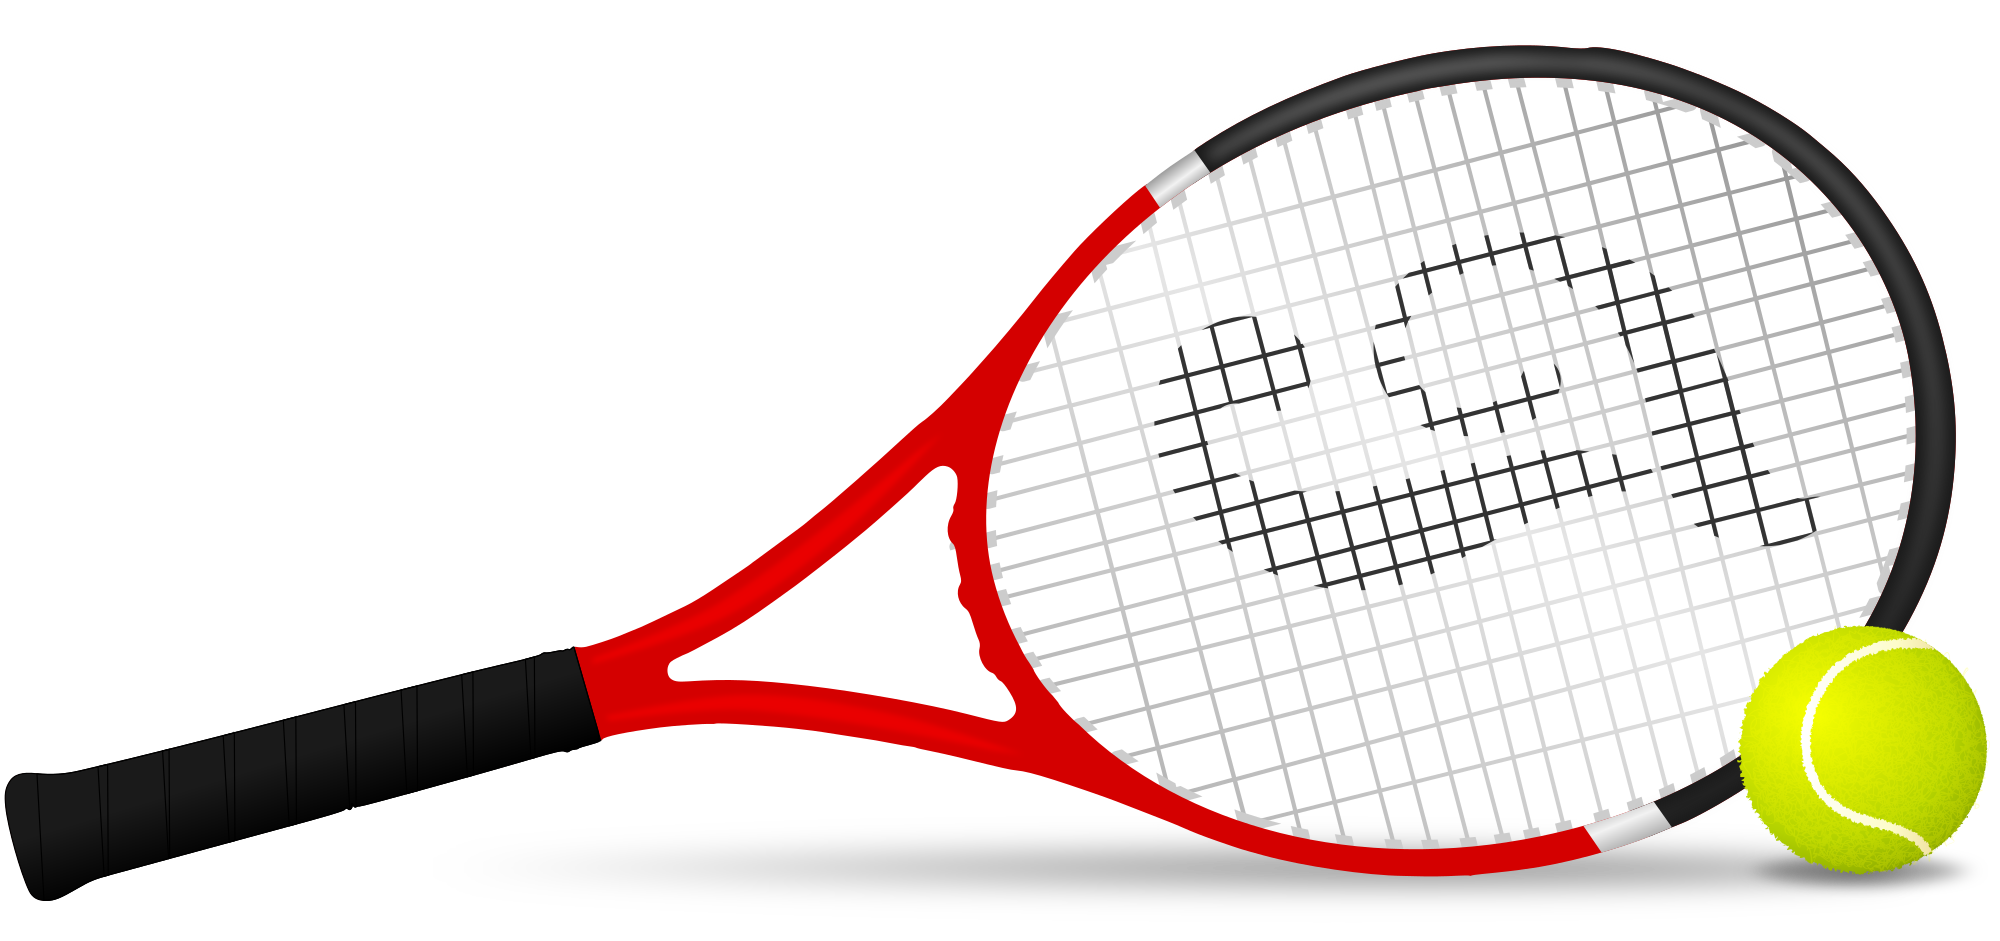 Sports clipart racket sport. File tennis rack svg